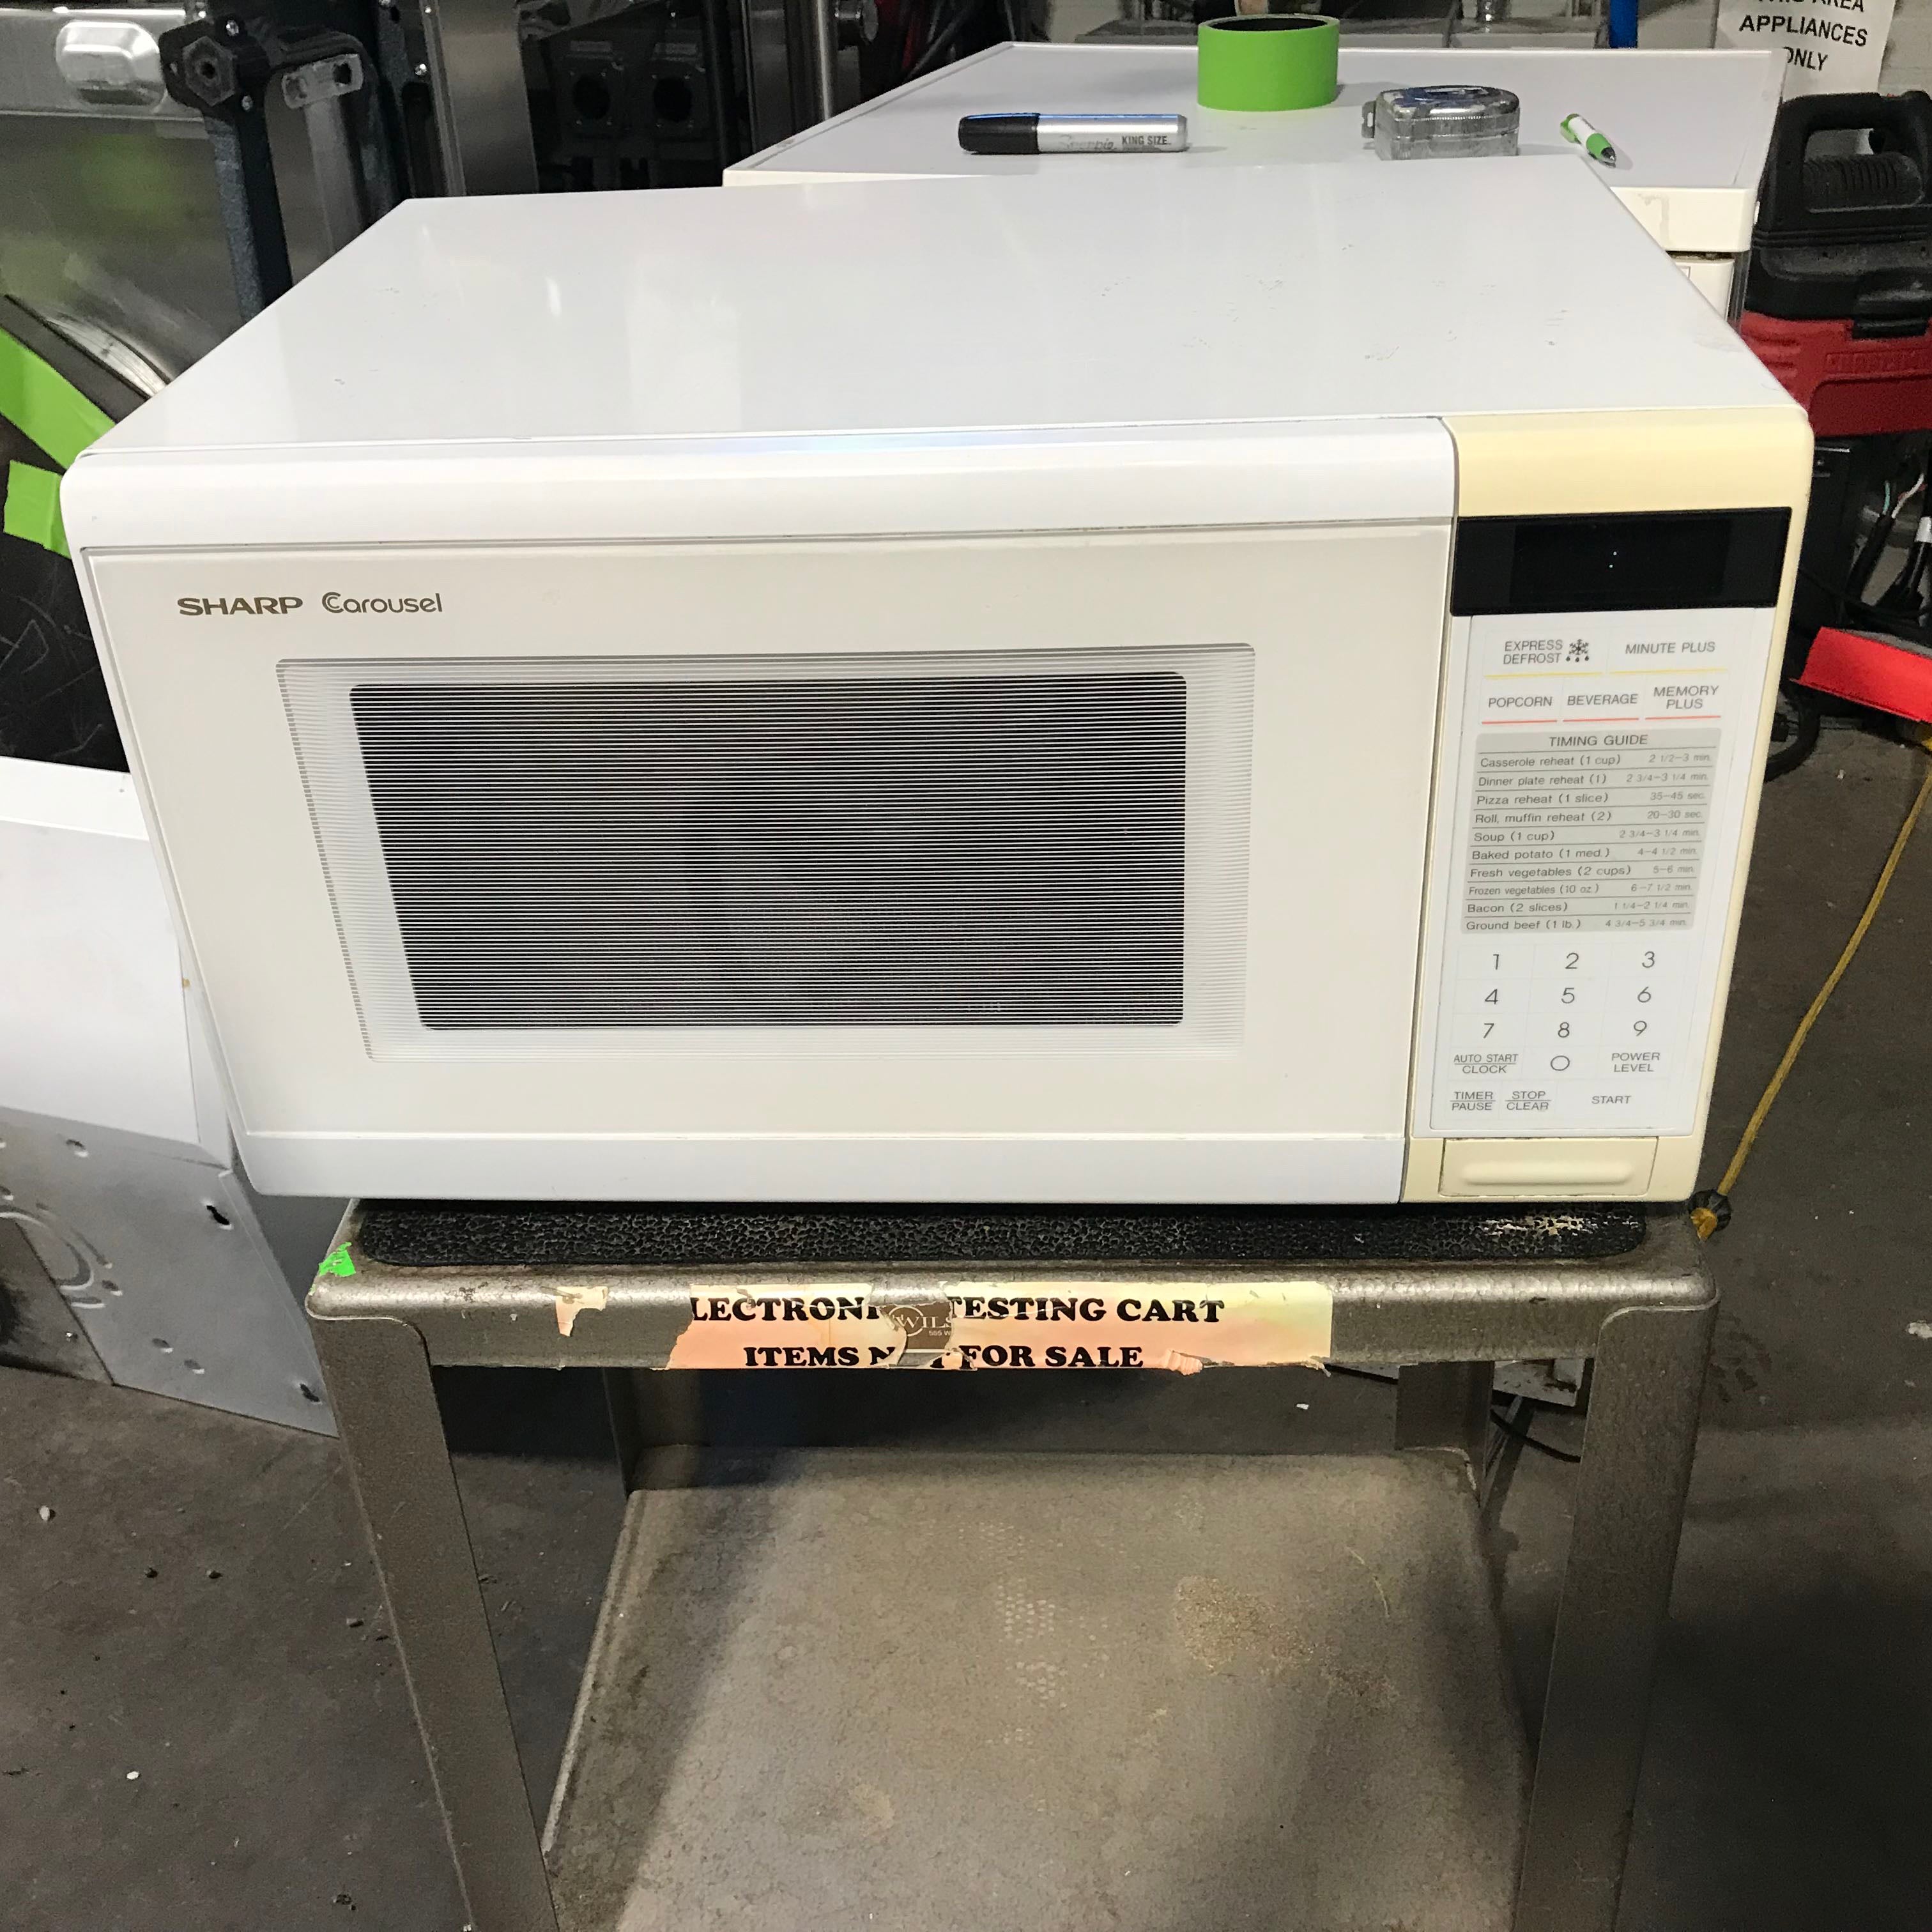 20.5"x 15"x 12" Sharp Carousel White Microwave